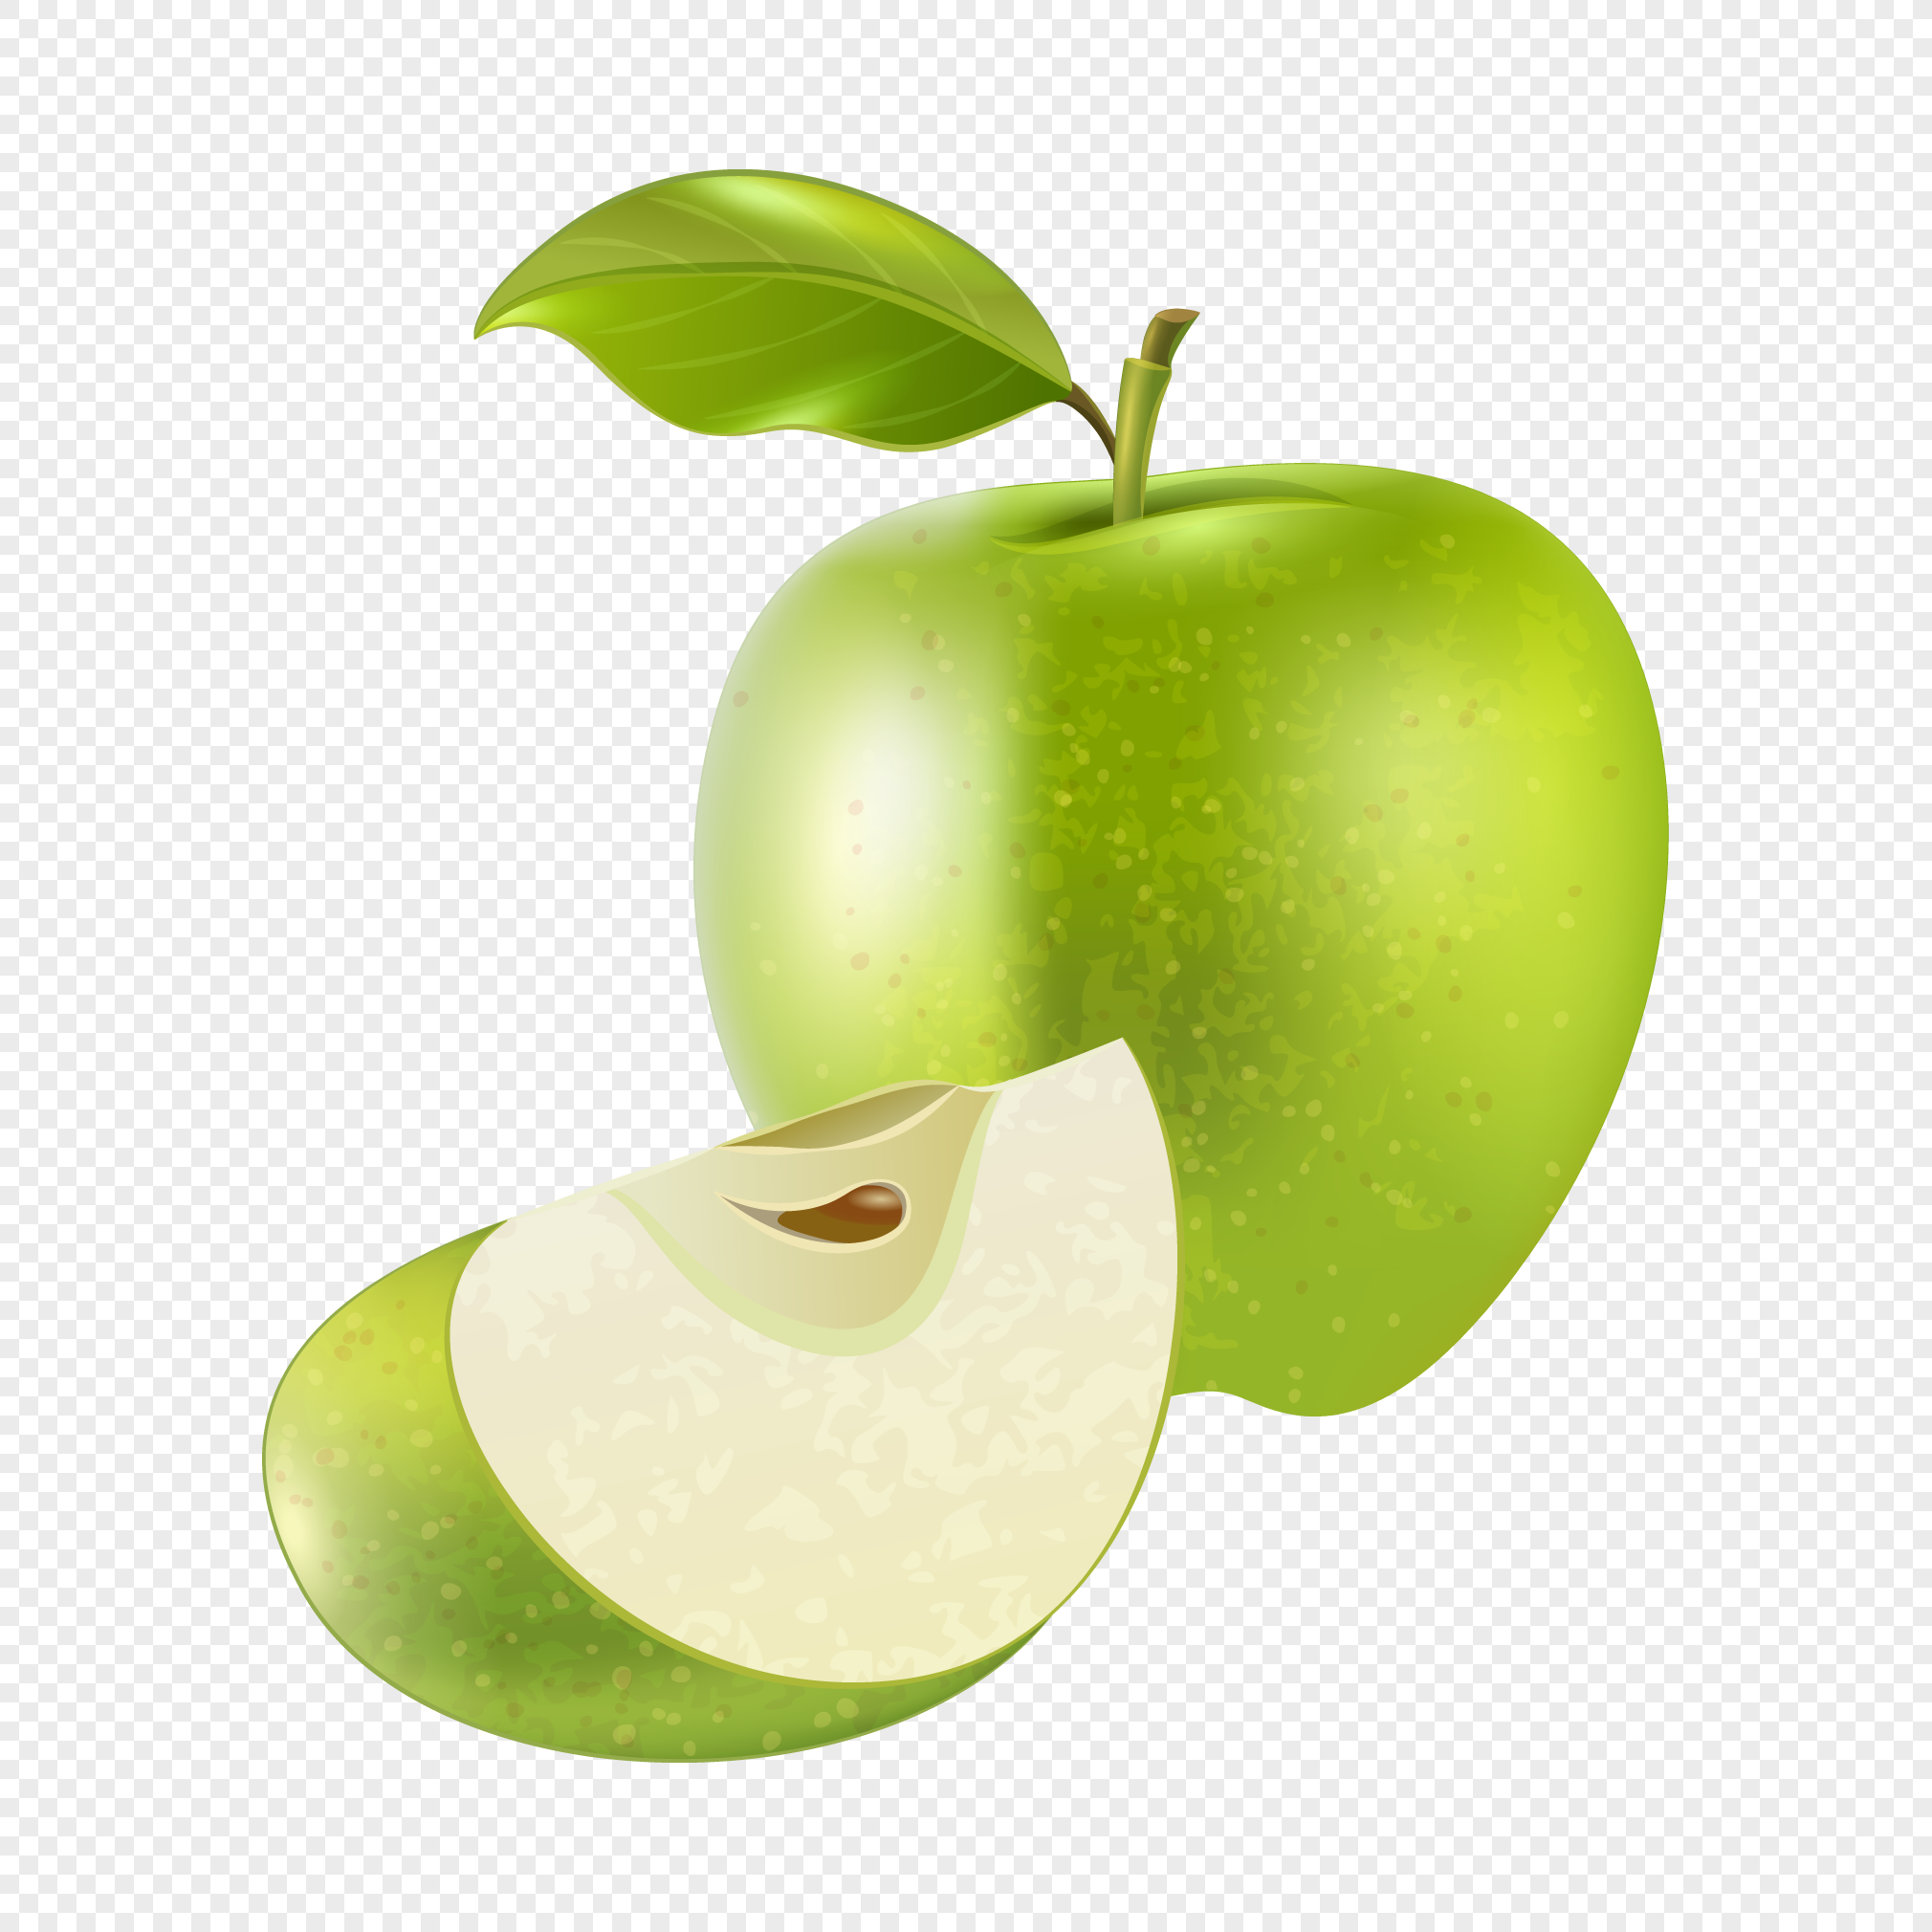 Долька яблока на белом фоне